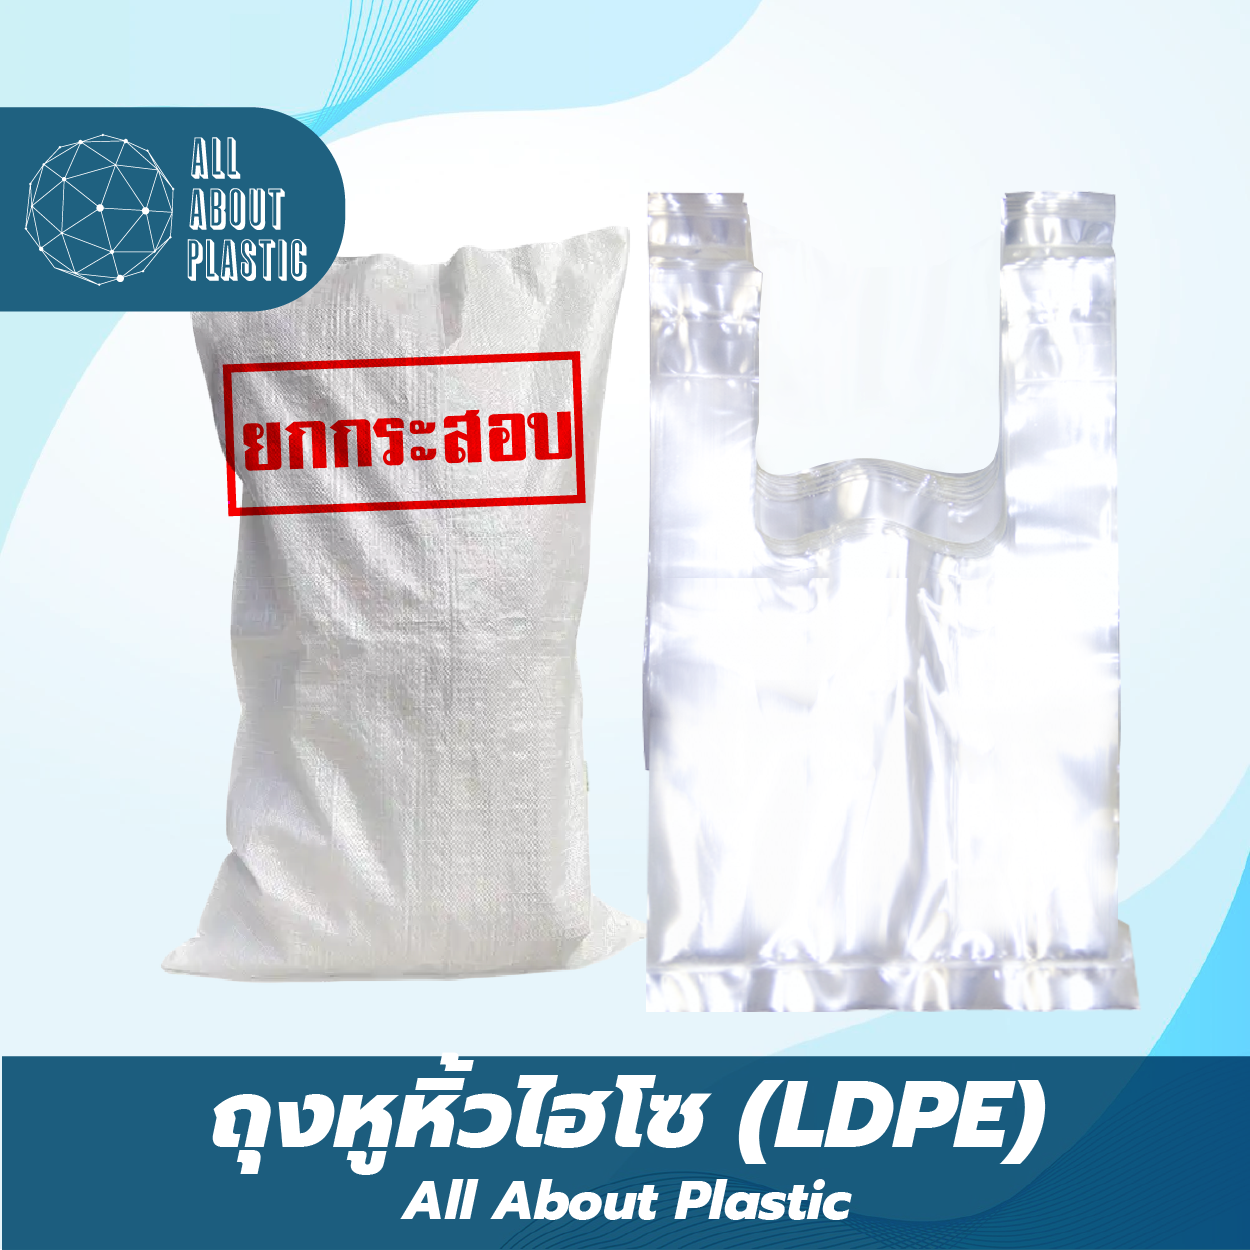  Handbag HDPE (Grade A) 